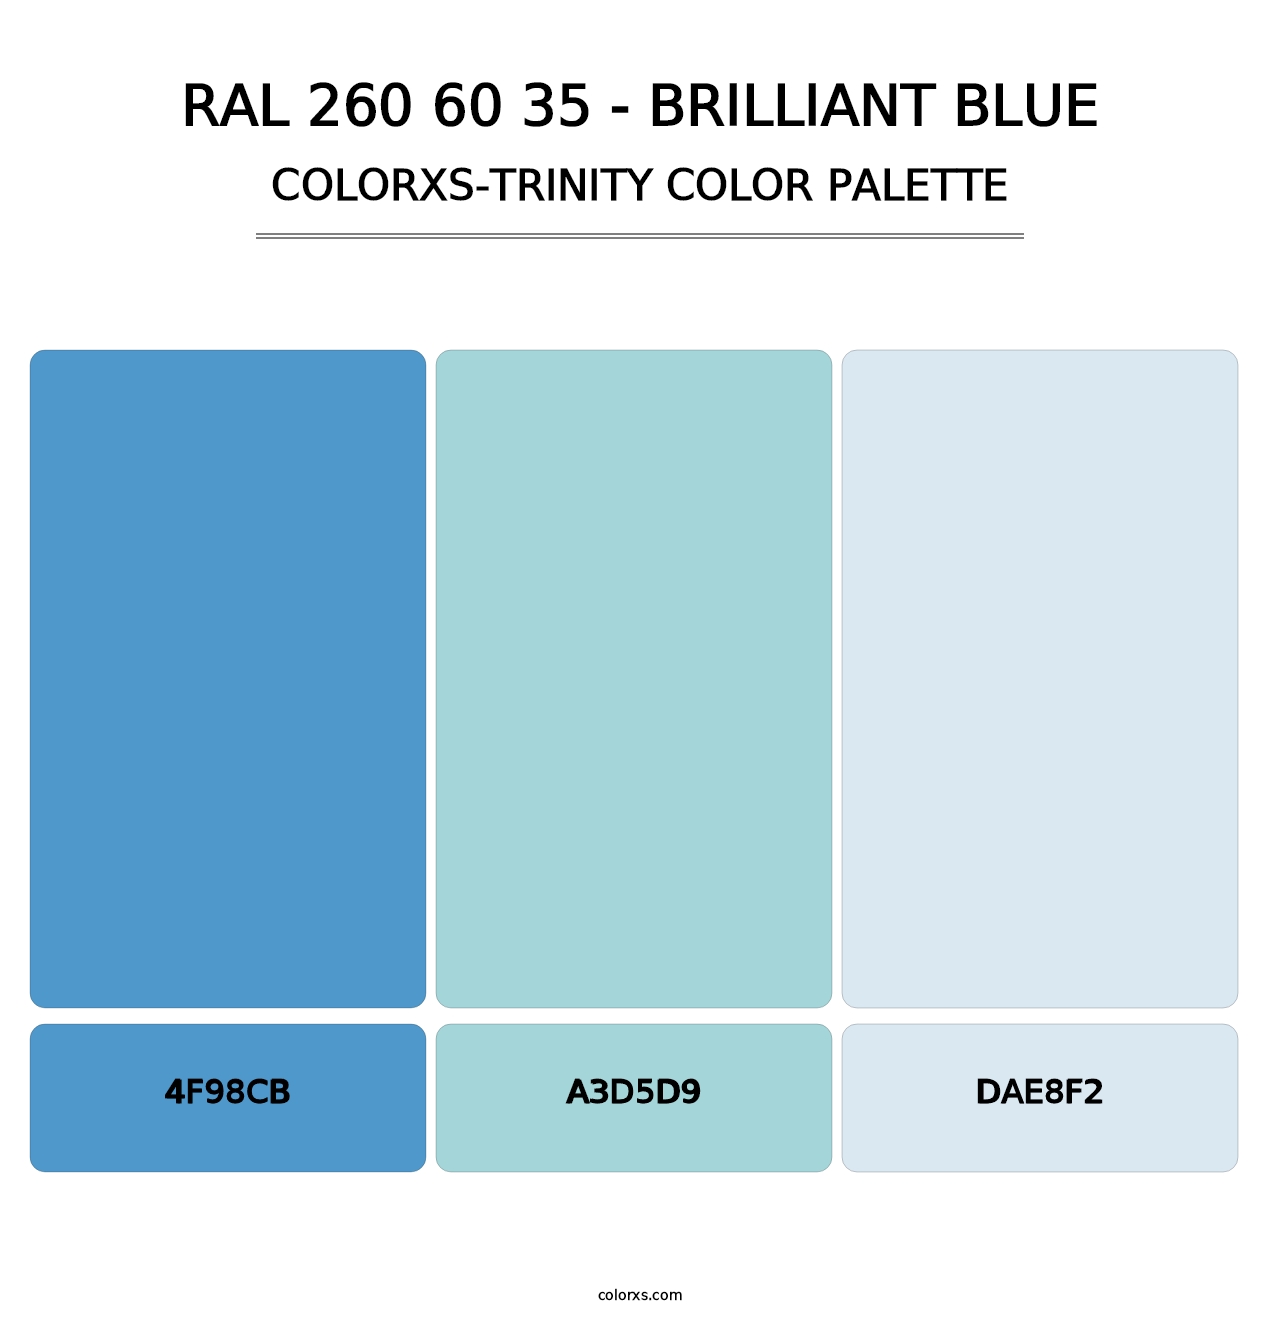 RAL 260 60 35 - Brilliant Blue - Colorxs Trinity Palette